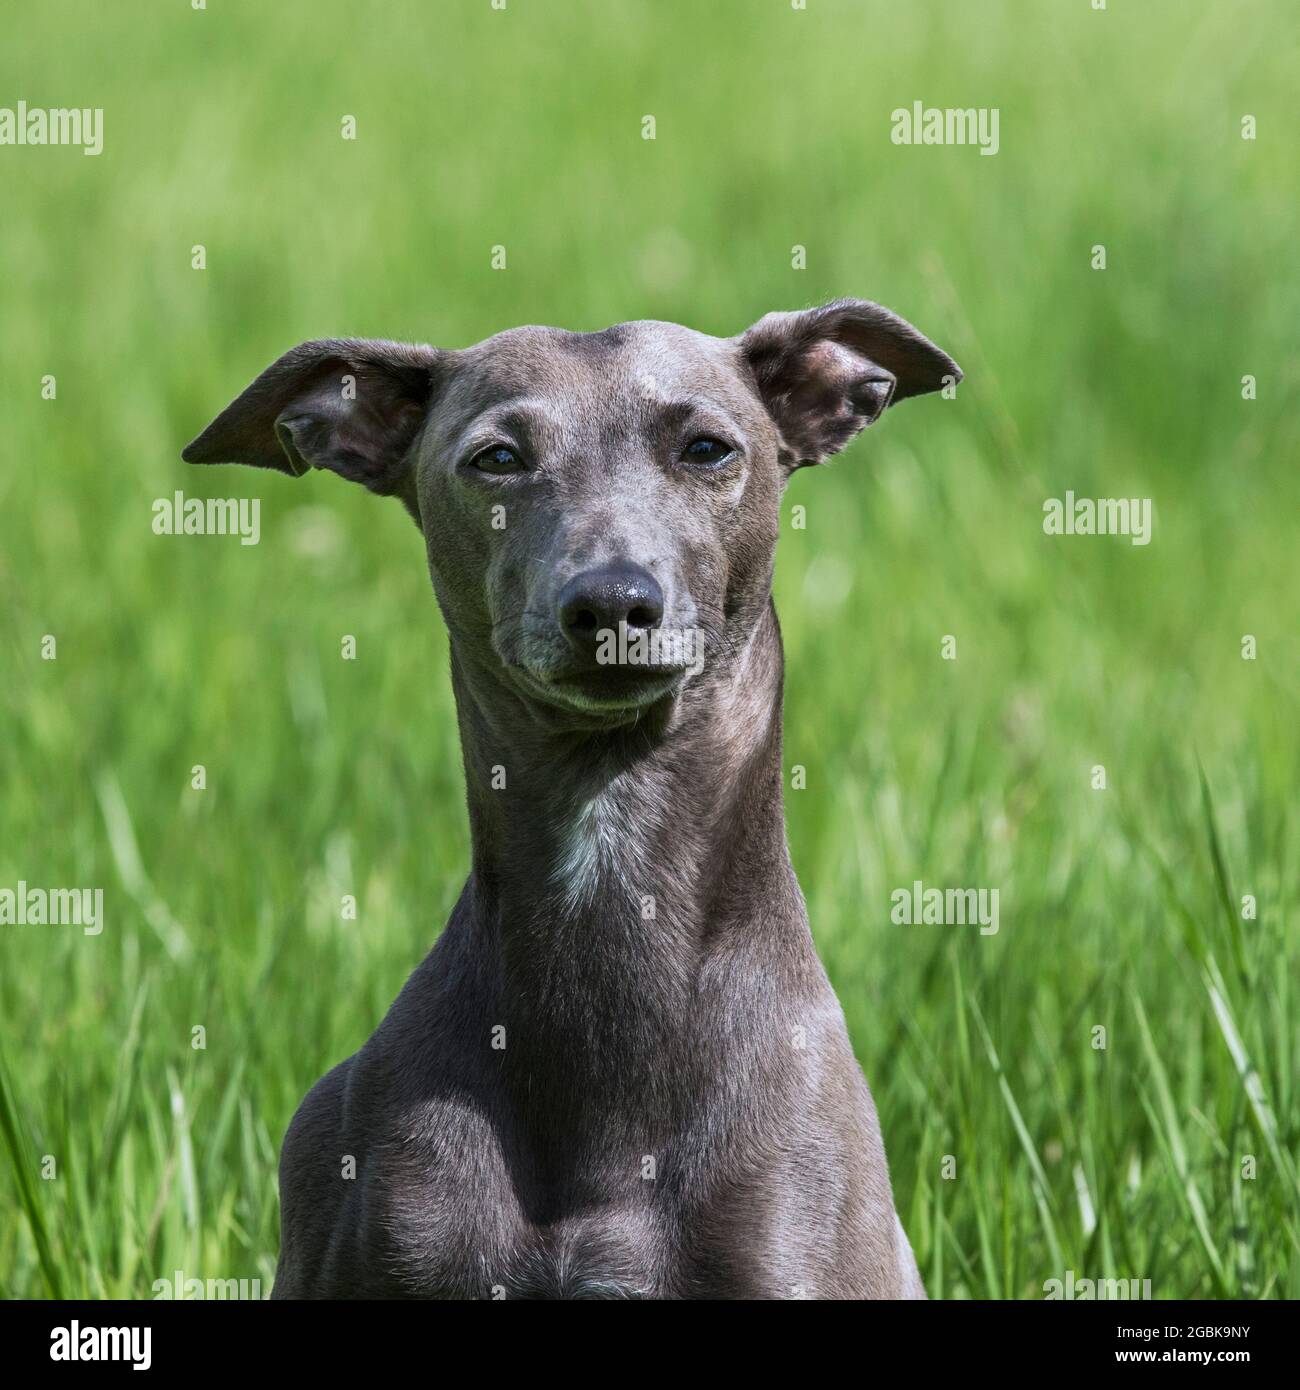 Italian Greyhound / Piccolo levriero Italiano / Italian Sighthound, smallest dog breed of the sighthounds, close-up portrait Stock Photo